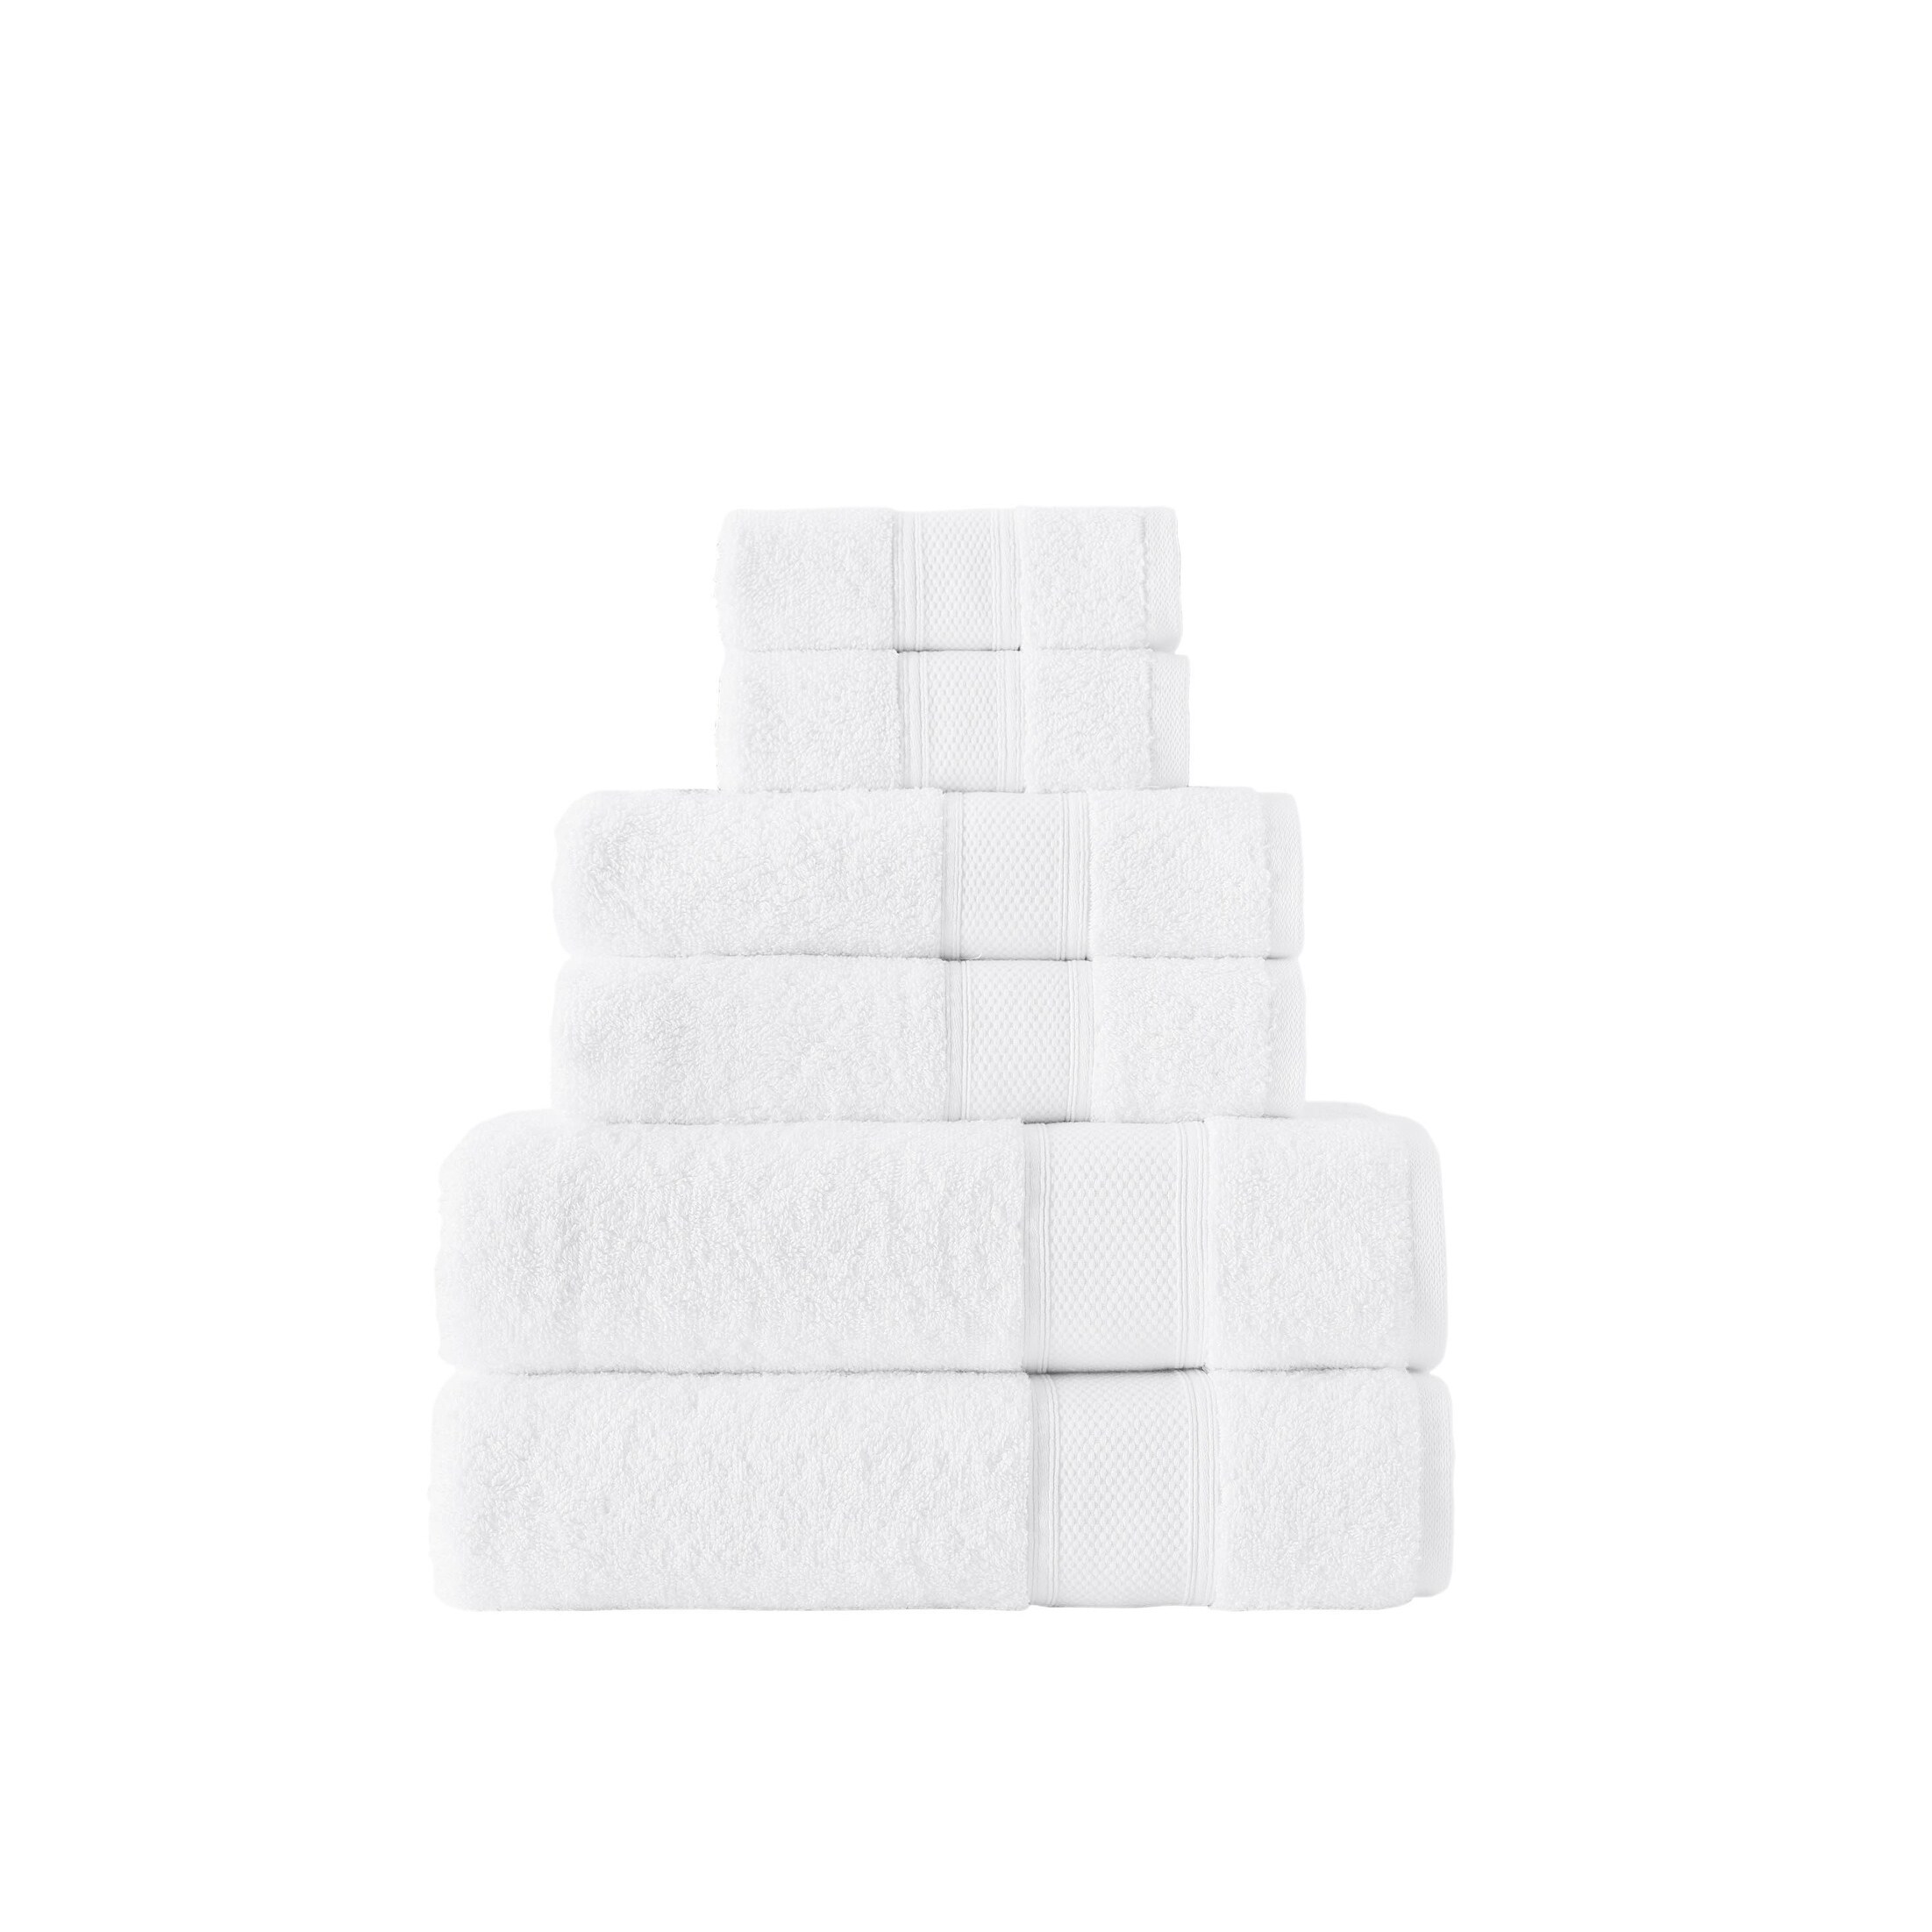 https://ak1.ostkcdn.com/images/products/17805341/Grund-Certified-Organic-Cotton-Towel-Sheet-Pinehurst-Collection-White-e861e6b9-da82-4b19-ba25-3b36609e6d9a.jpg